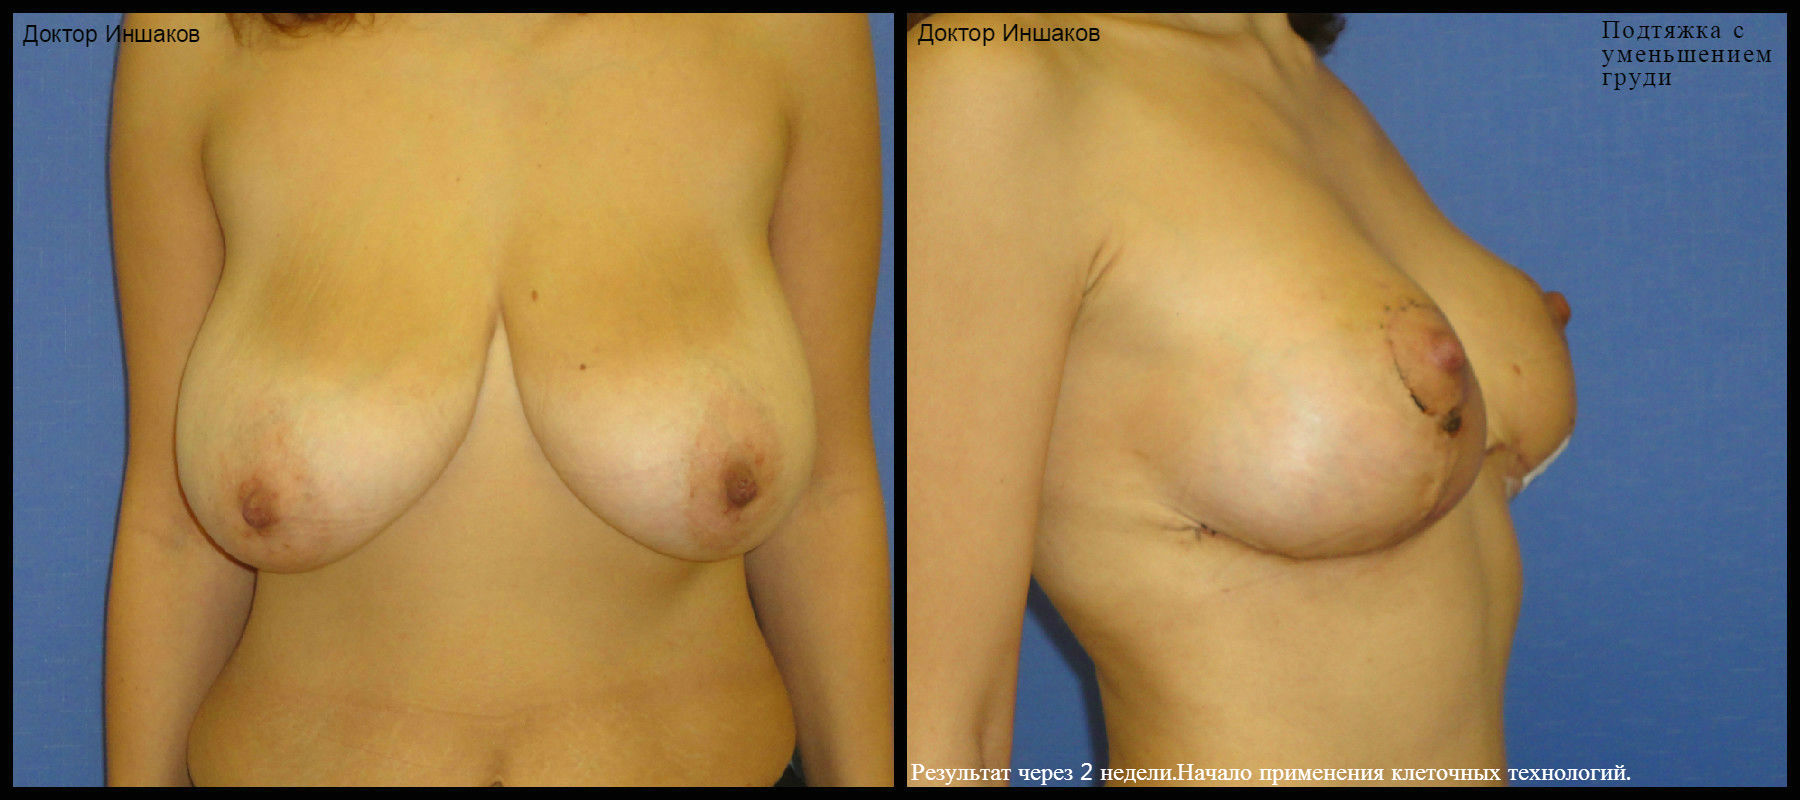 операция на груди у женщин фото 98